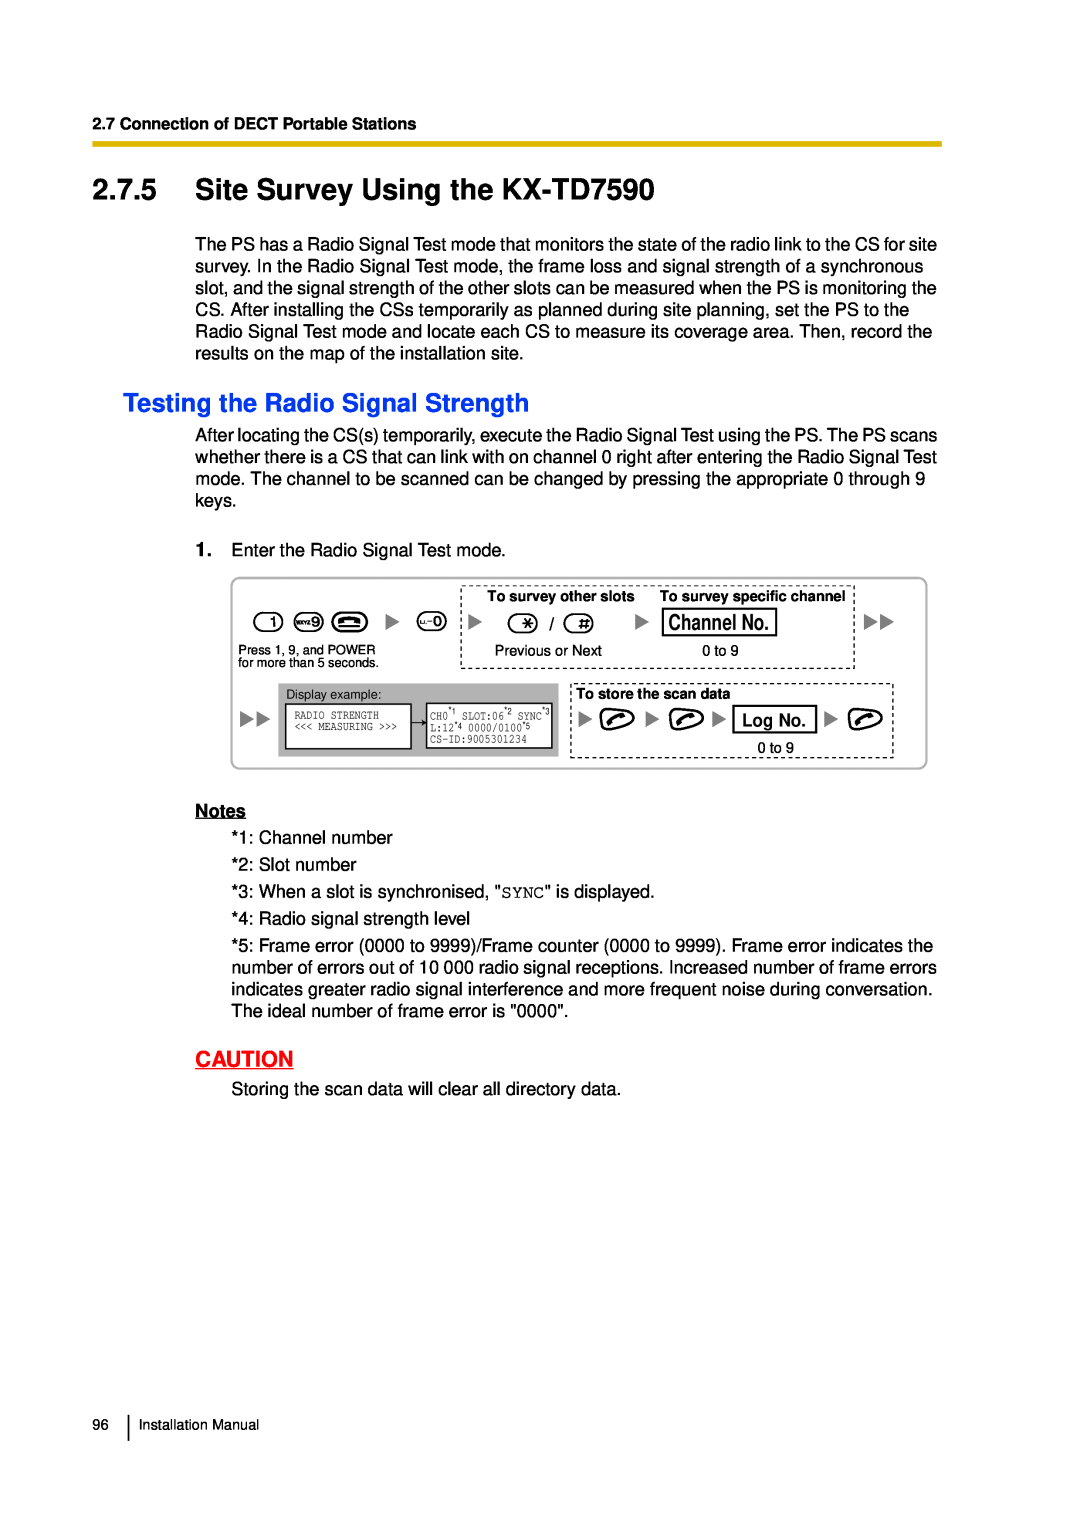 Panasonic KX-TDA30 installation manual 2.7.5Site Survey Using the KX-TD7590, Testing the Radio Signal Strength, Notes 